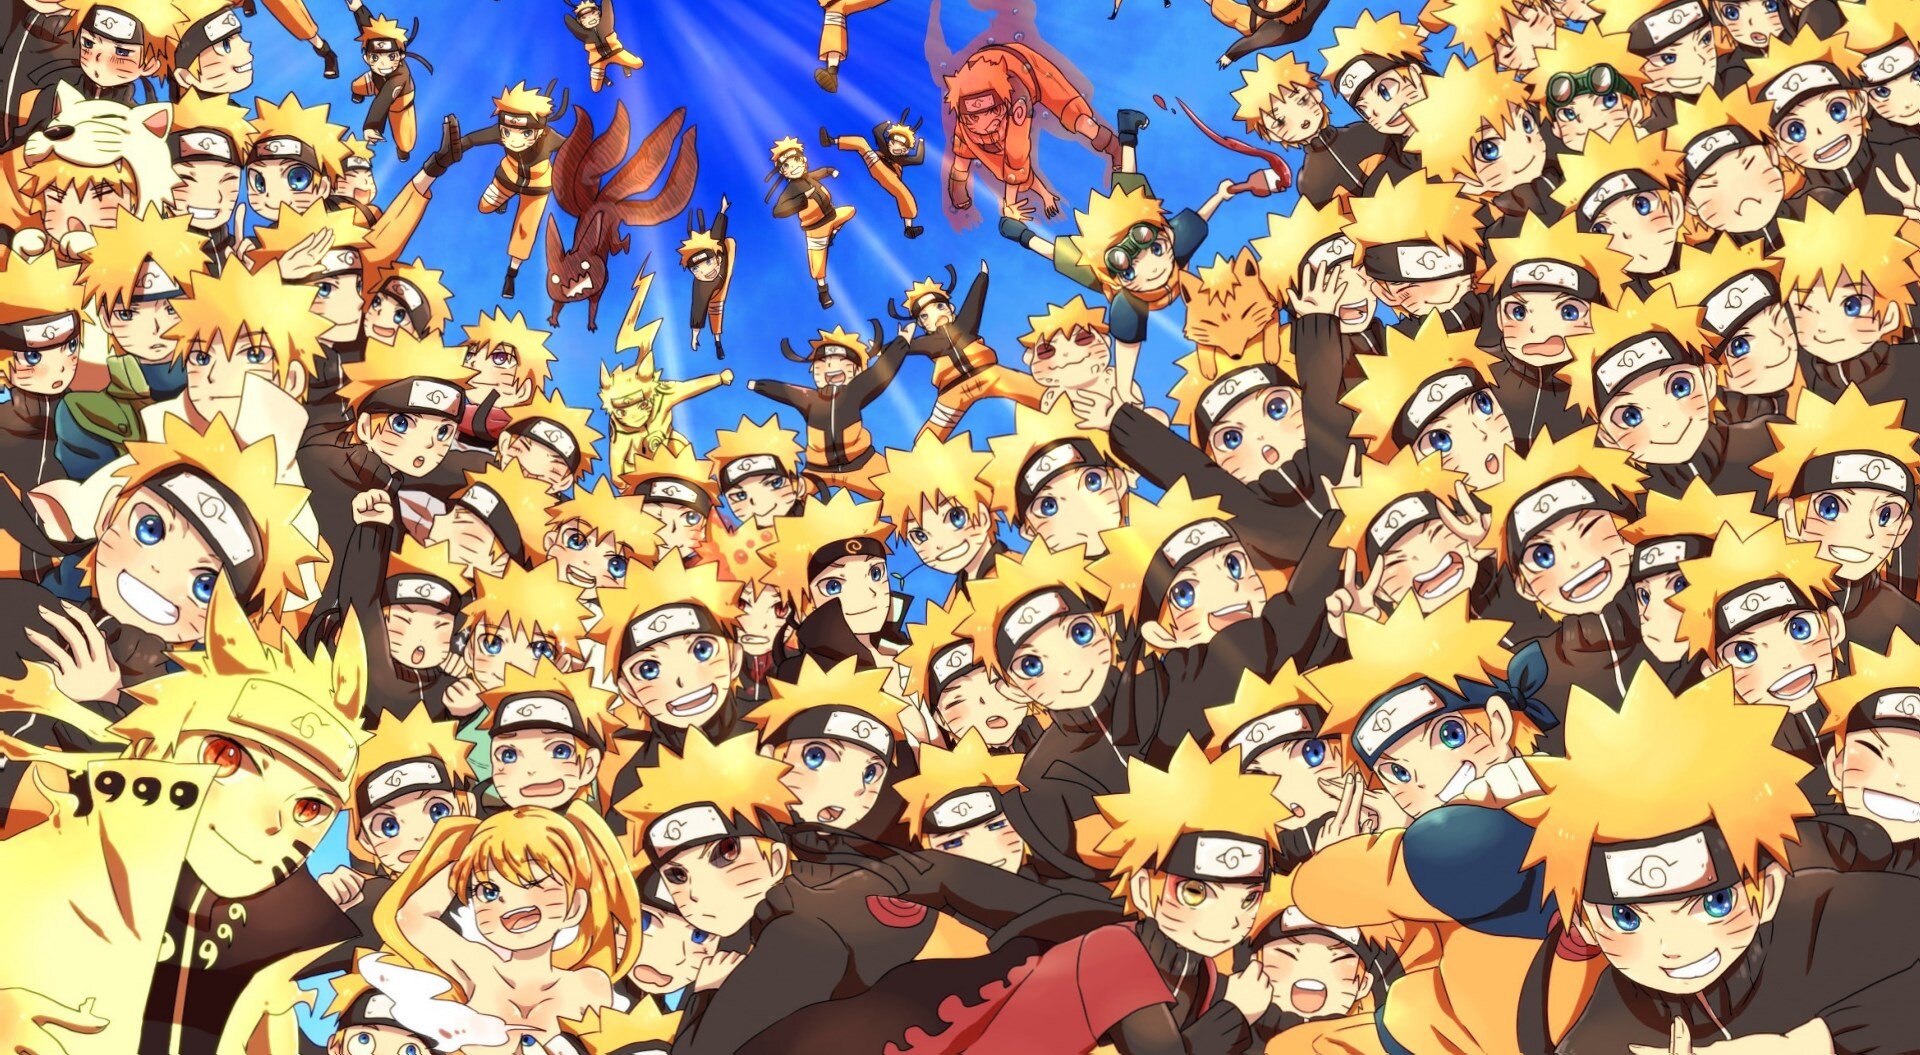 Yellow Naruto Wallpapers